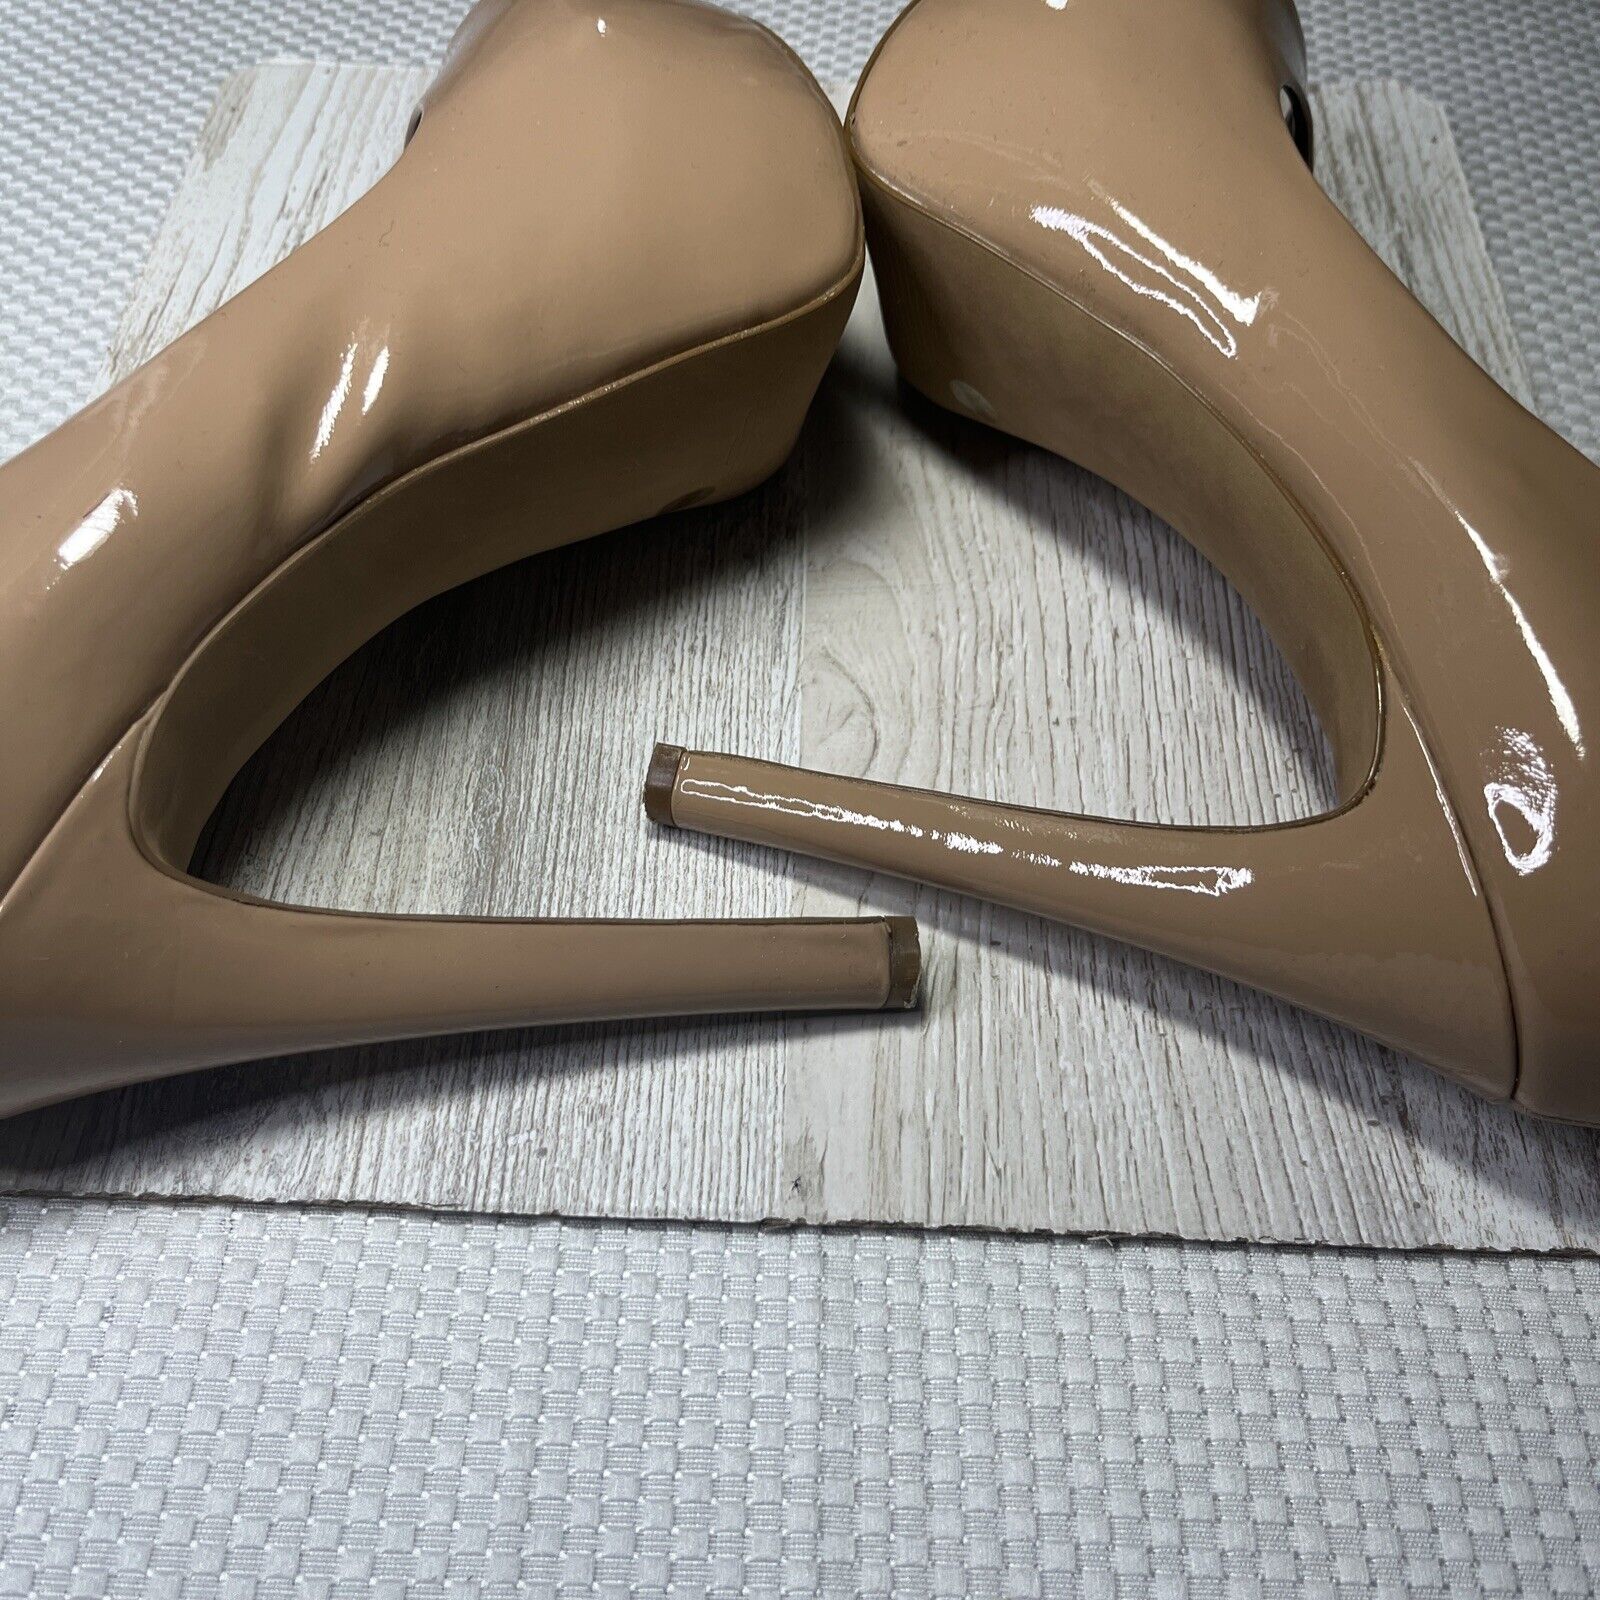 jessica simpson heels 9.5 - image 4